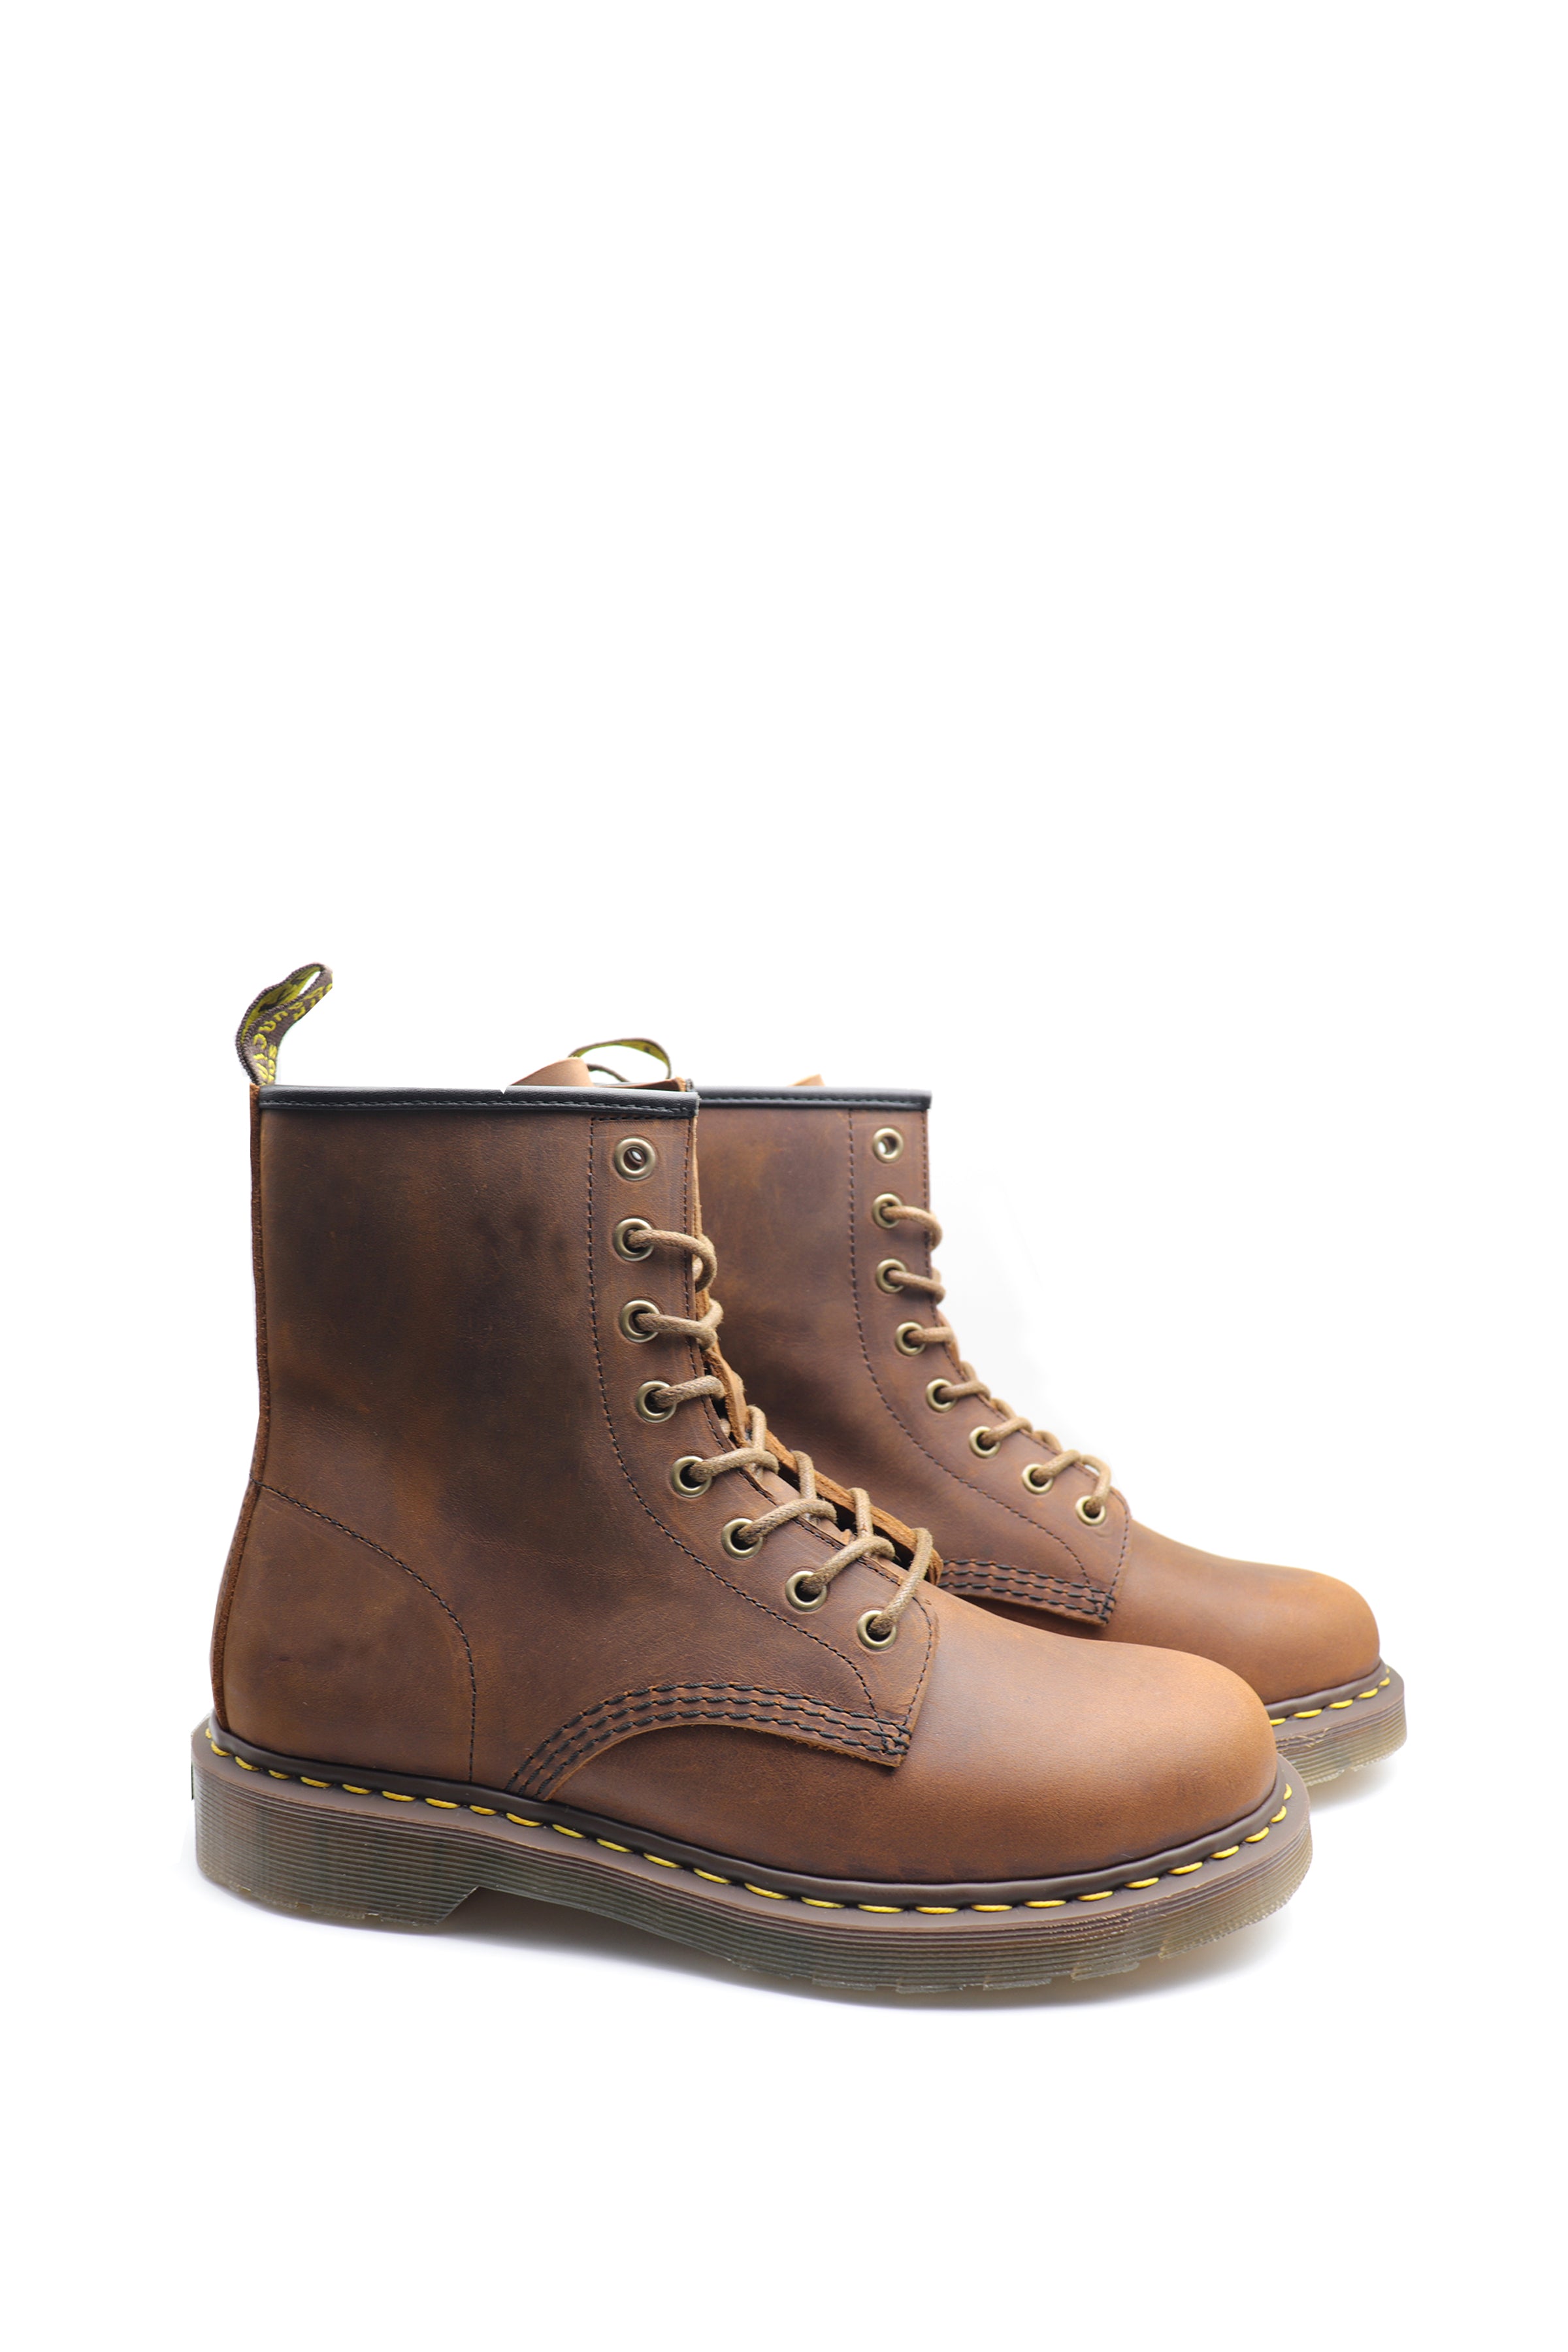 Men's Eden Brown Full-grain Leather Goodyear Welt Boots